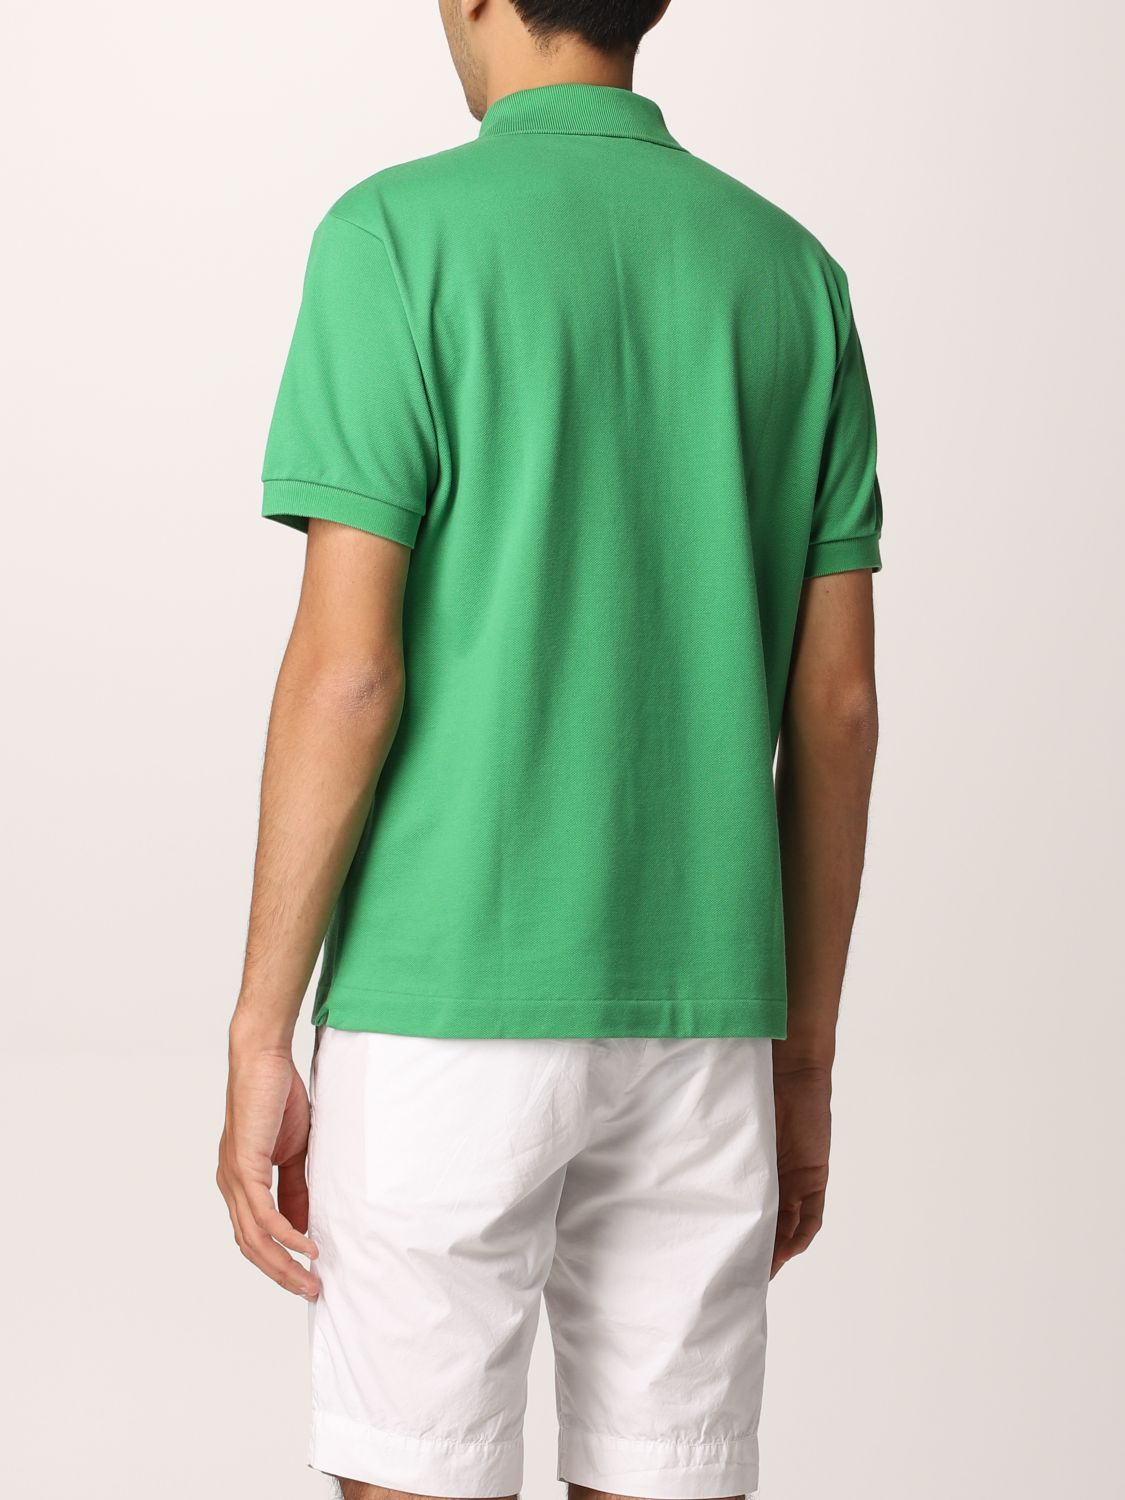 LACOSTE: polo shirt for man - Pistachio | Lacoste polo shirt L1212 ...